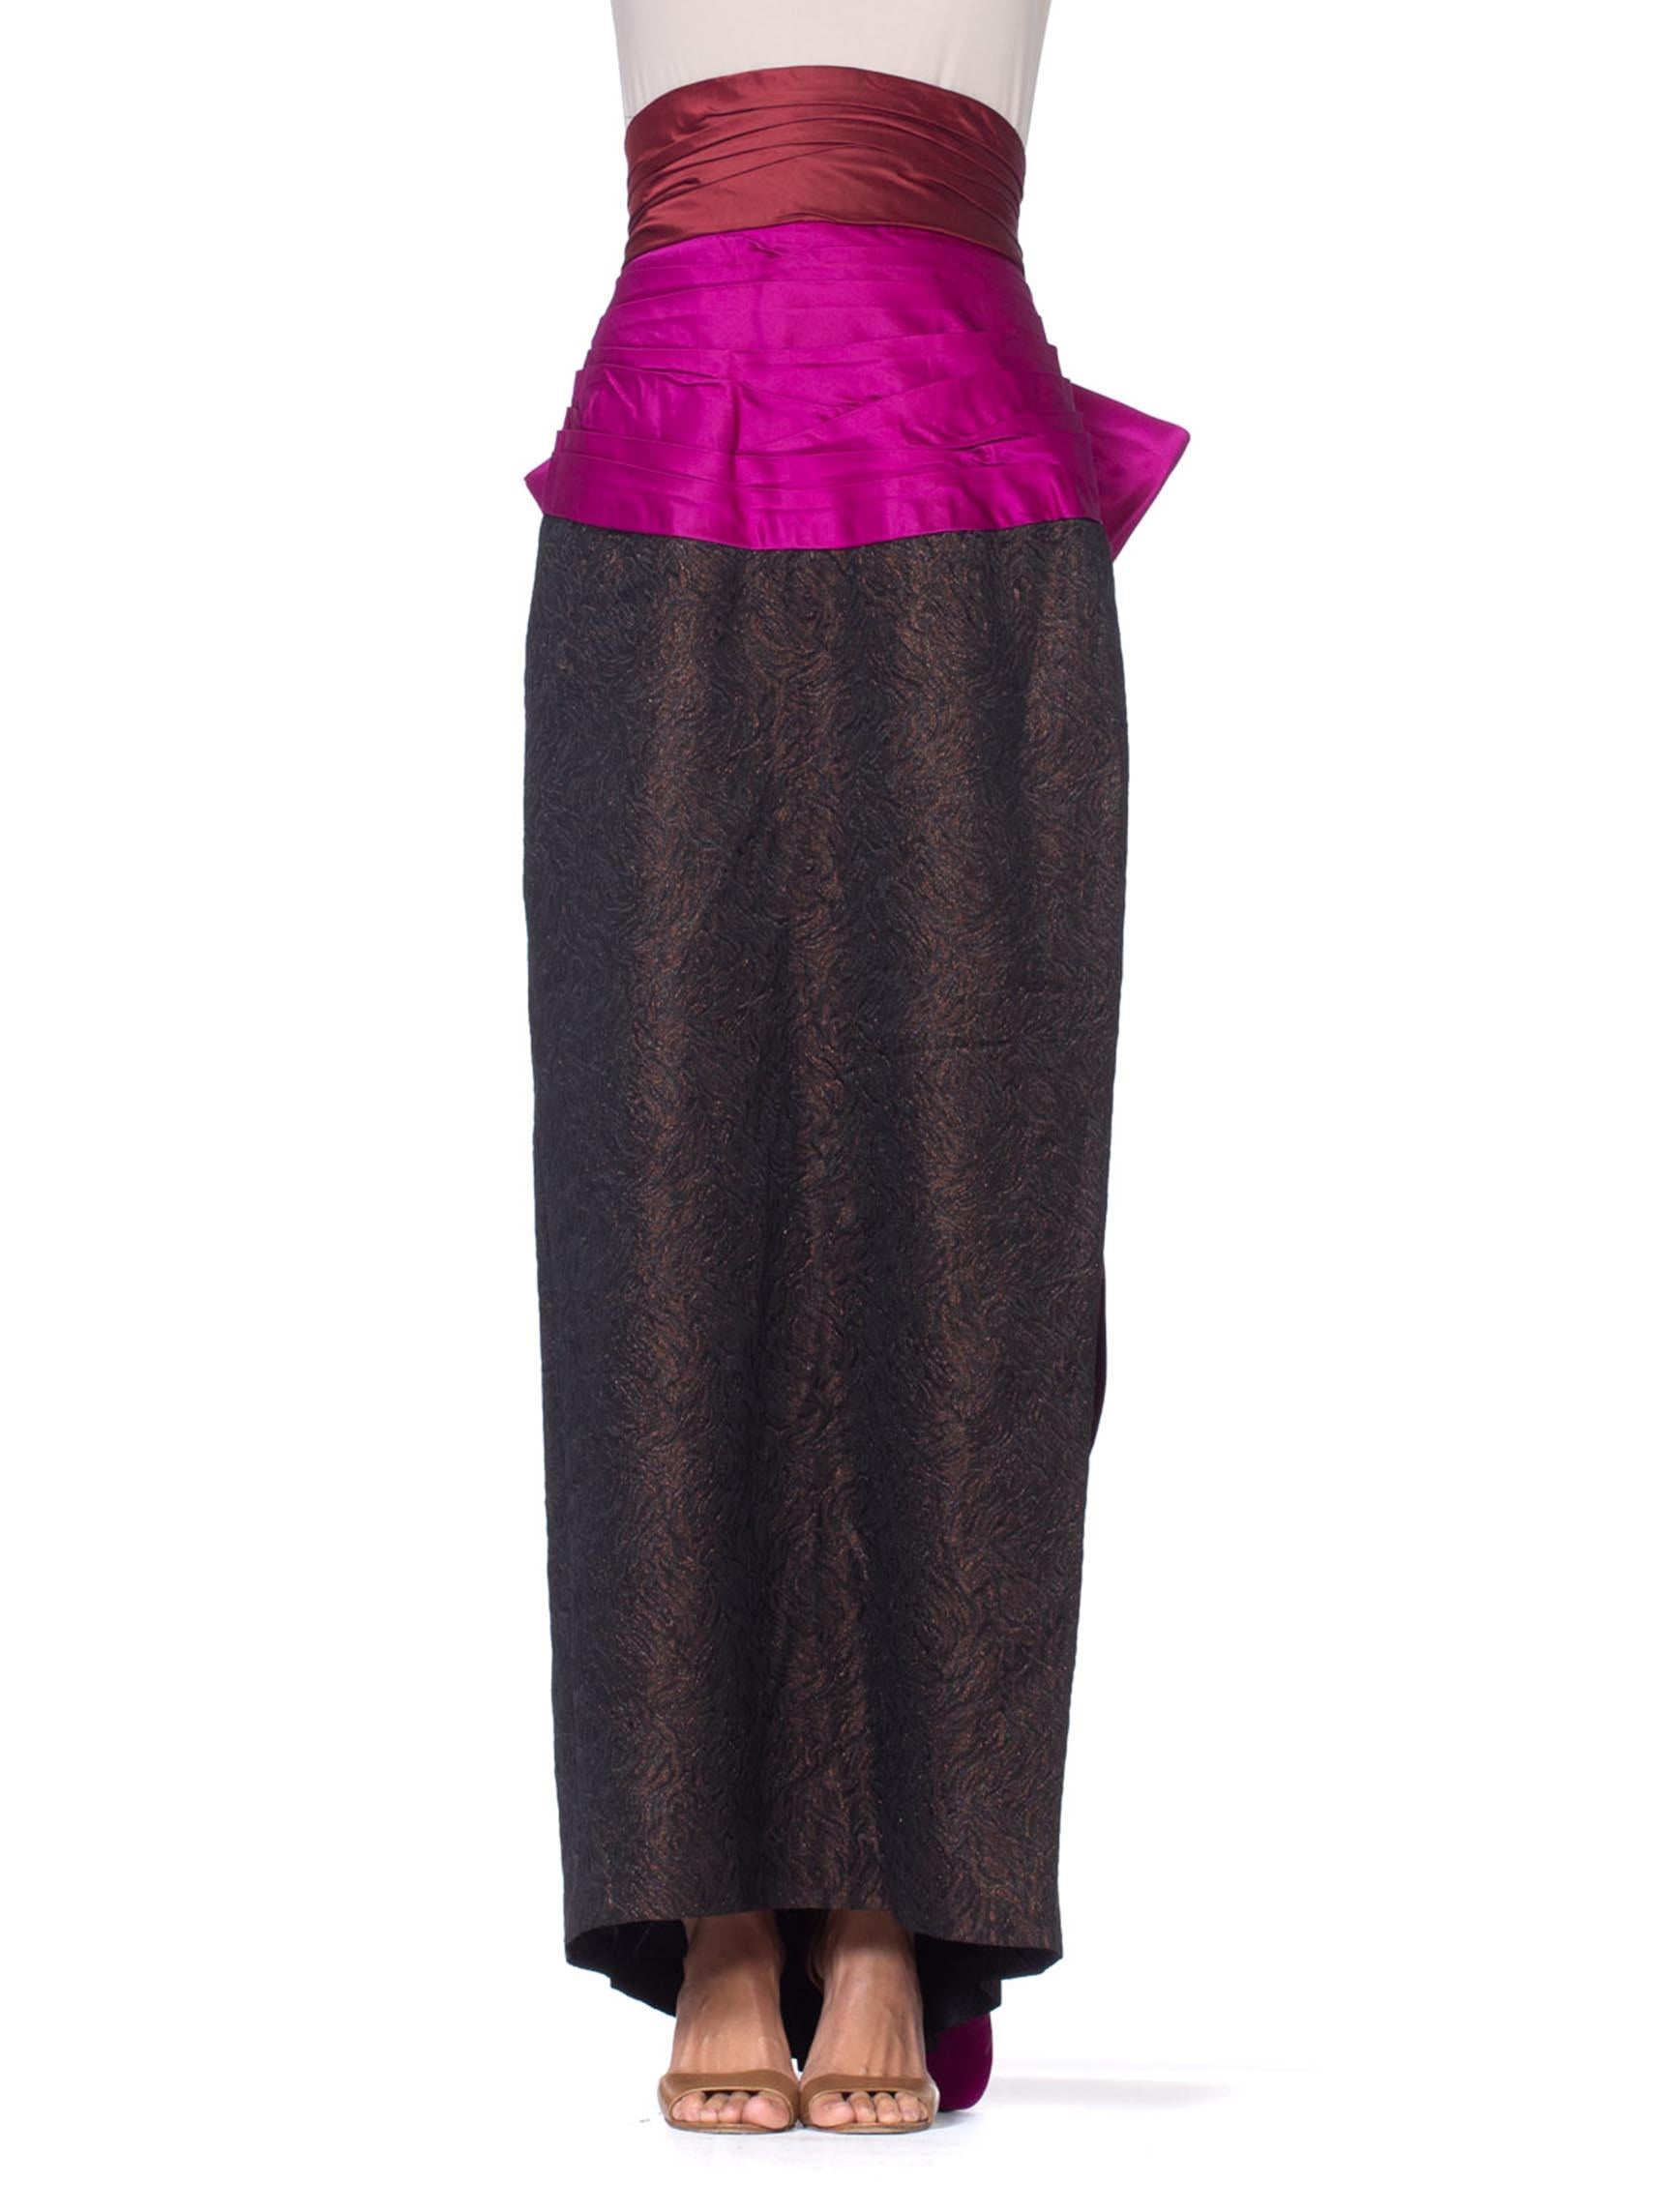 1980S YVES SAINT LAURENT Black Silk Jacquard YSL Metallic High-Waisted Skirt With Giant Pink Bow